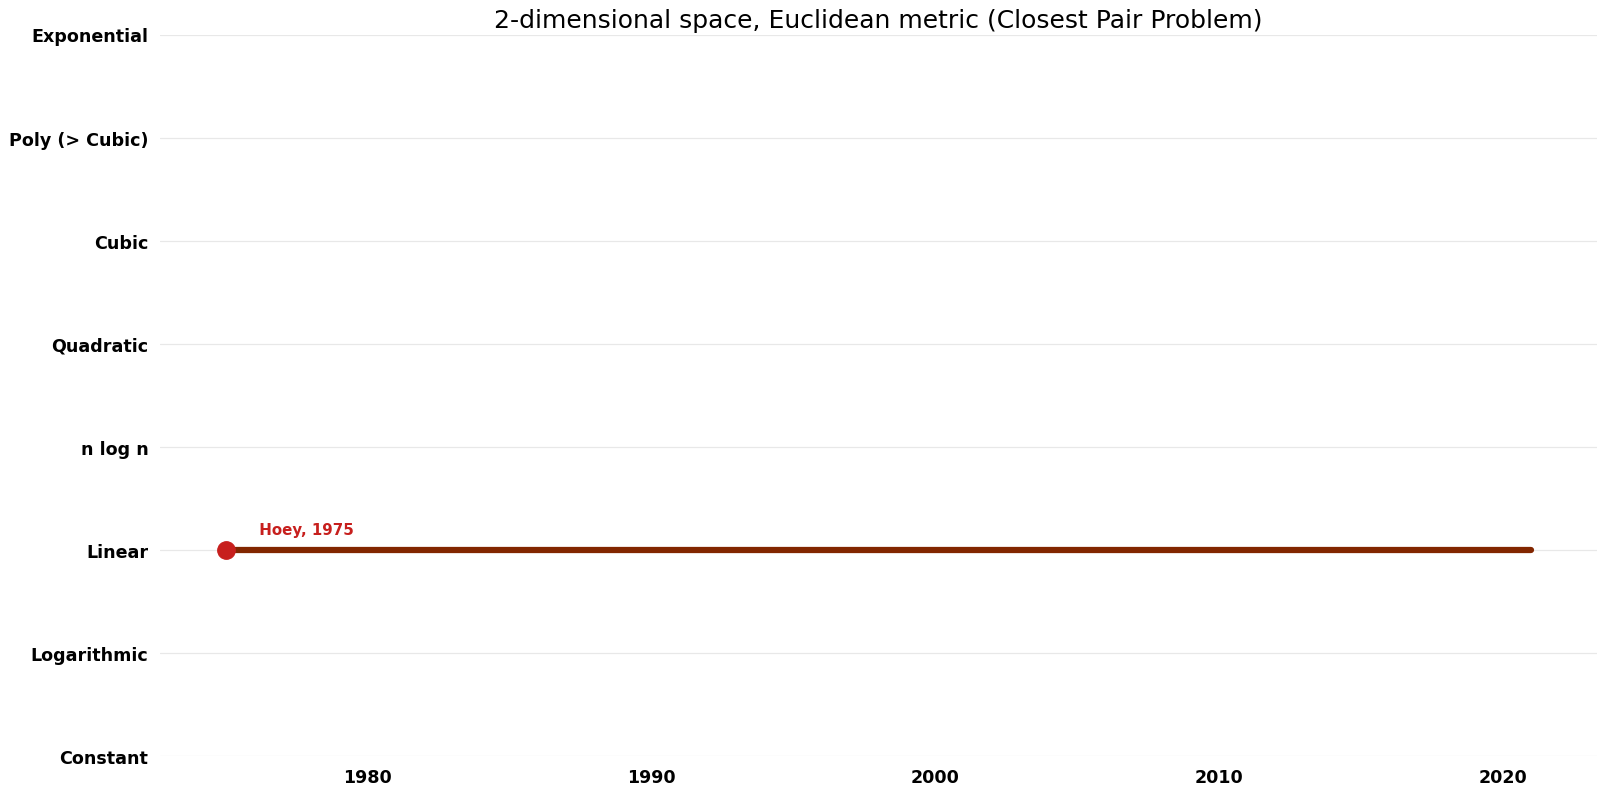 Closest Pair Problem - 2-dimensional space, Euclidean metric - Space.png